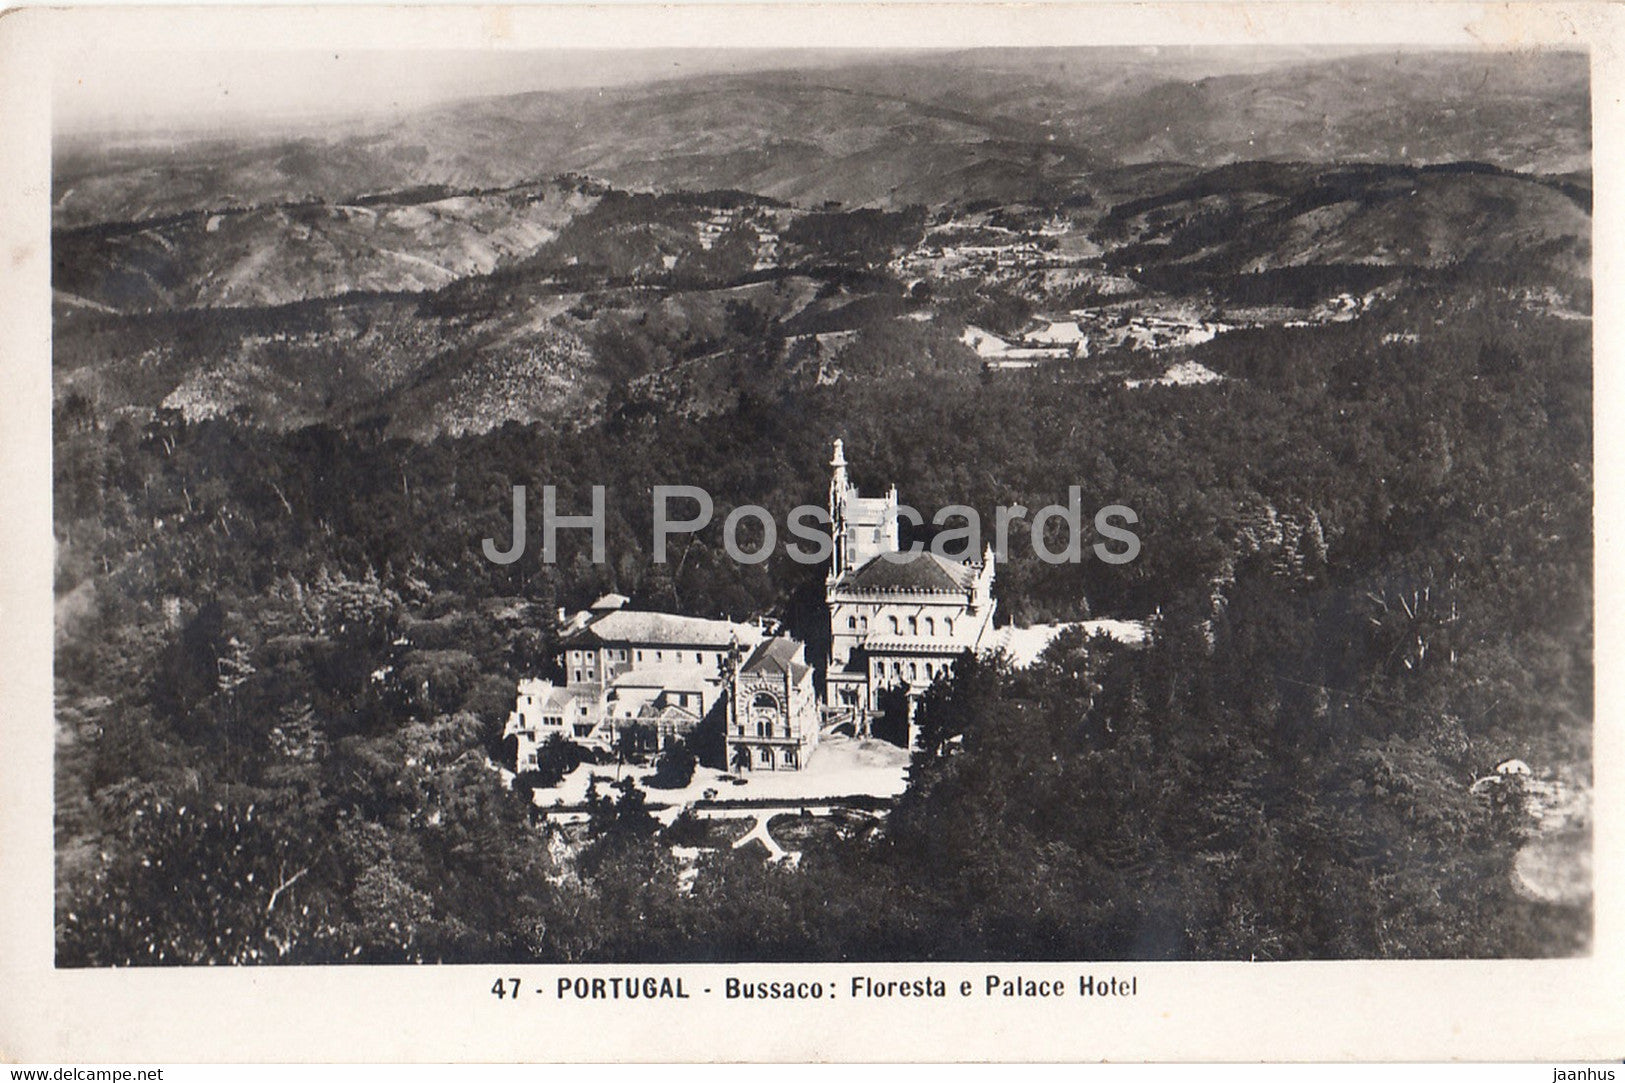 Bussaco - Floresta e Palace Hotel - 47 - old postcard - Portugal - unused - JH Postcards